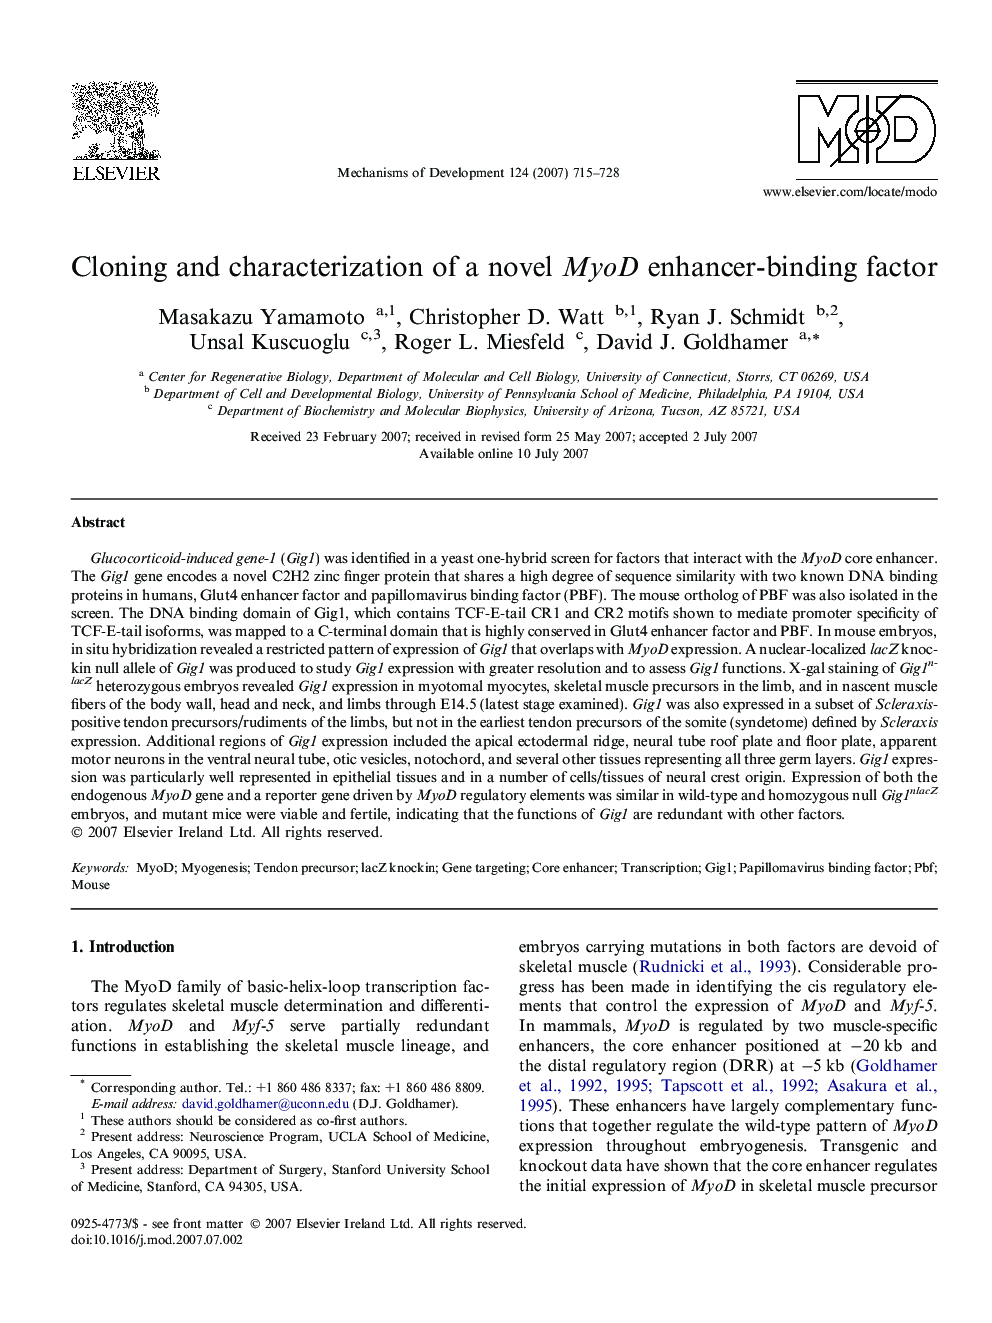 Cloning and characterization of a novel MyoD enhancer-binding factor